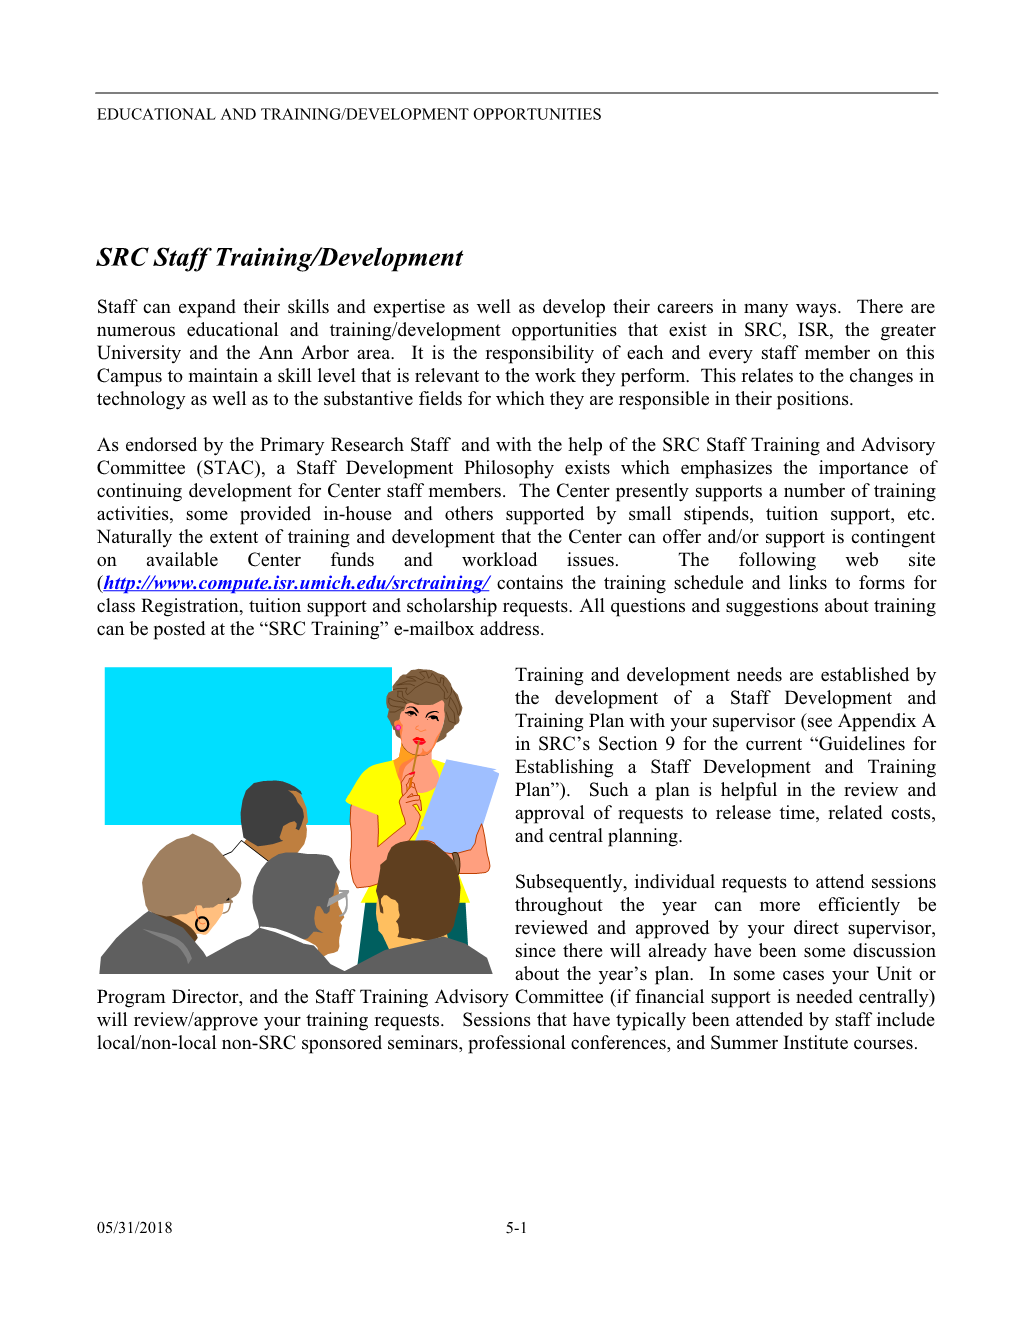 SRC Staff Training/Development